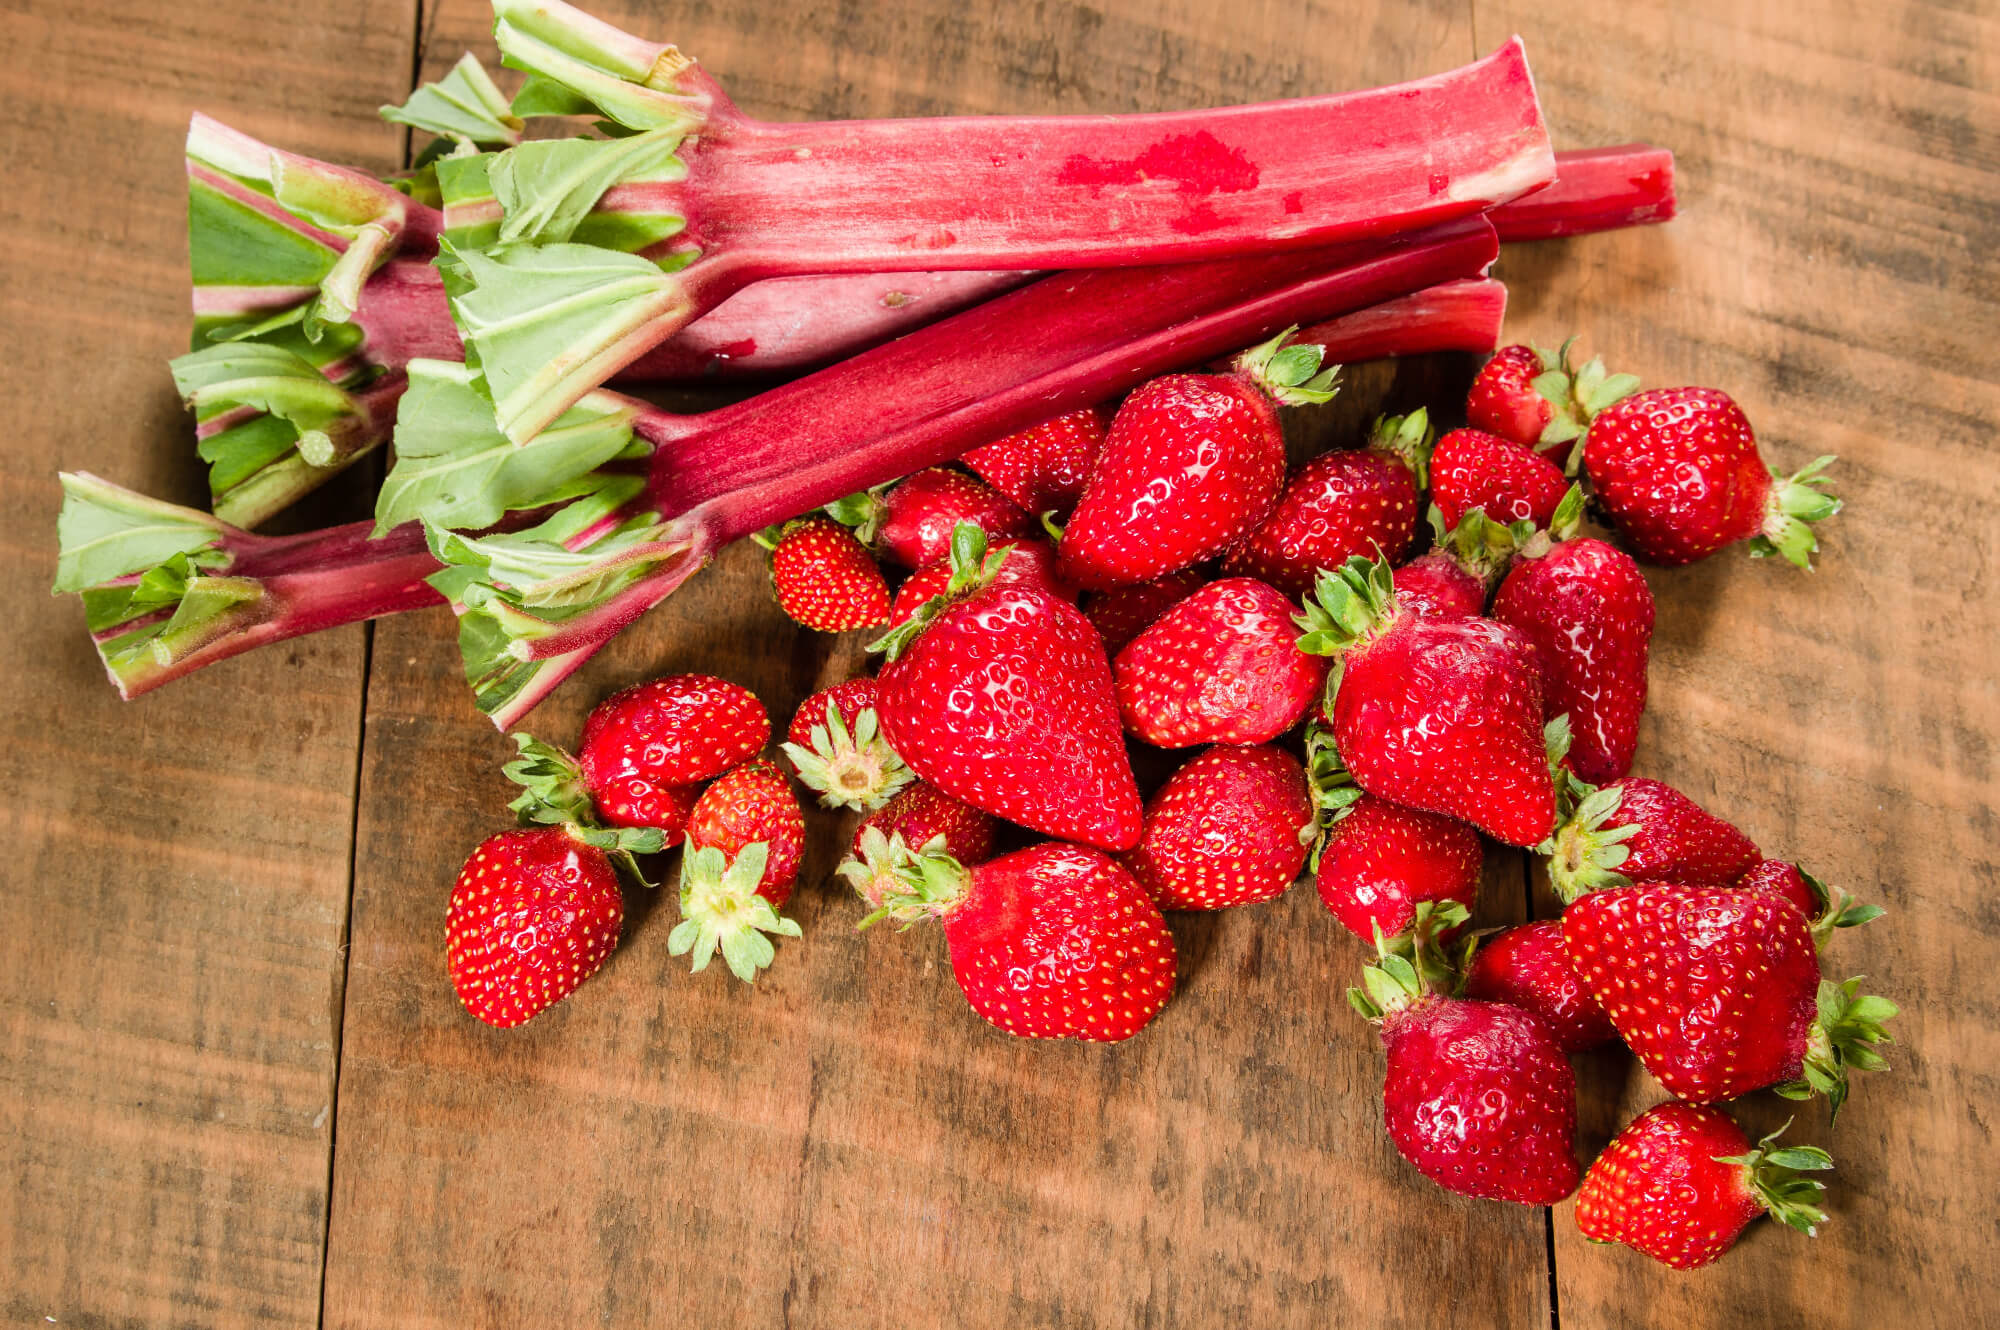 fresh strawberries and rhubarb stalks